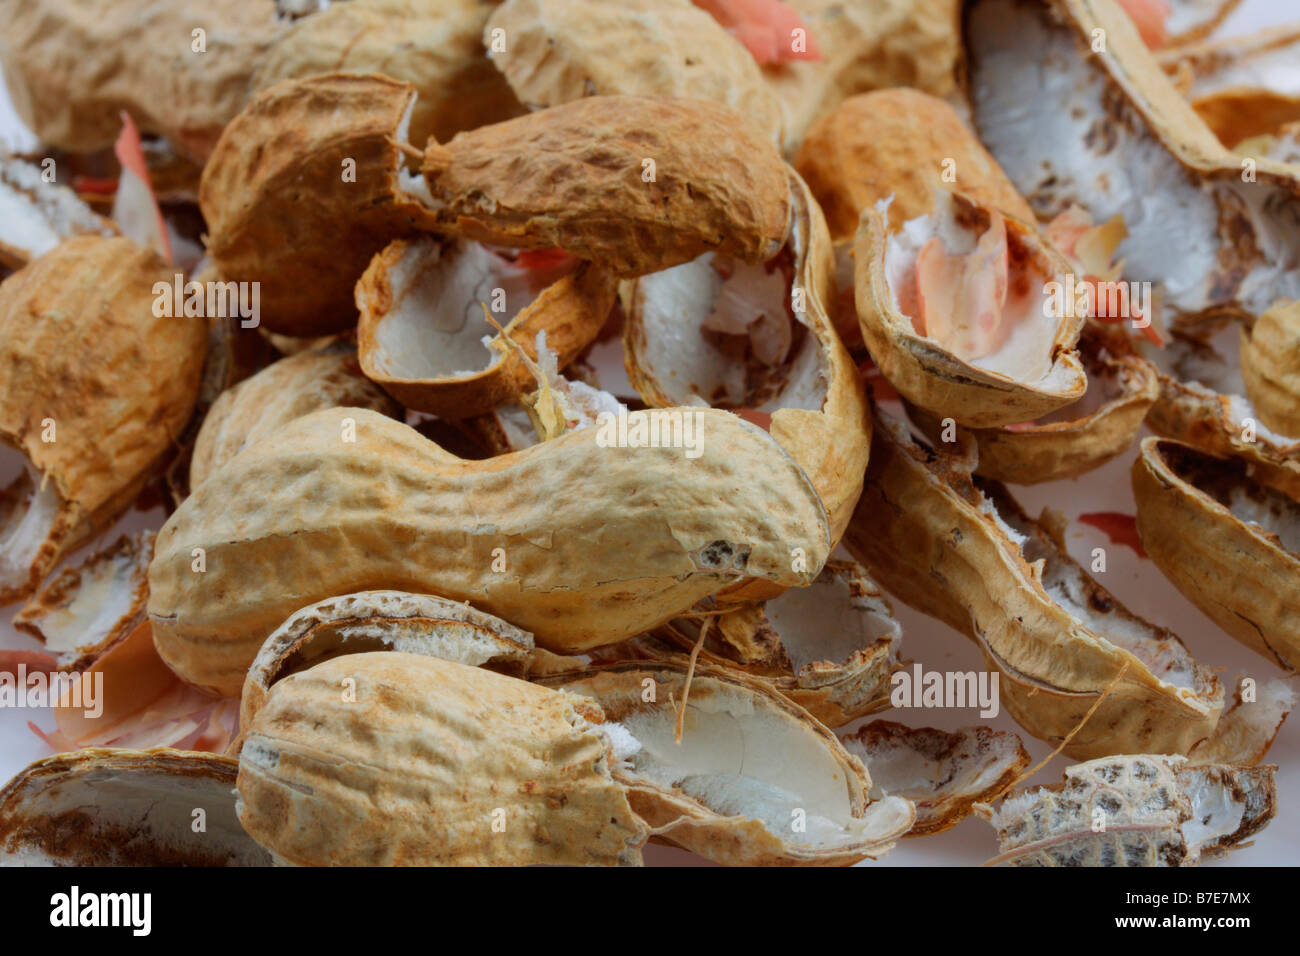 cracked shells of roasted peanuts Stock Photo